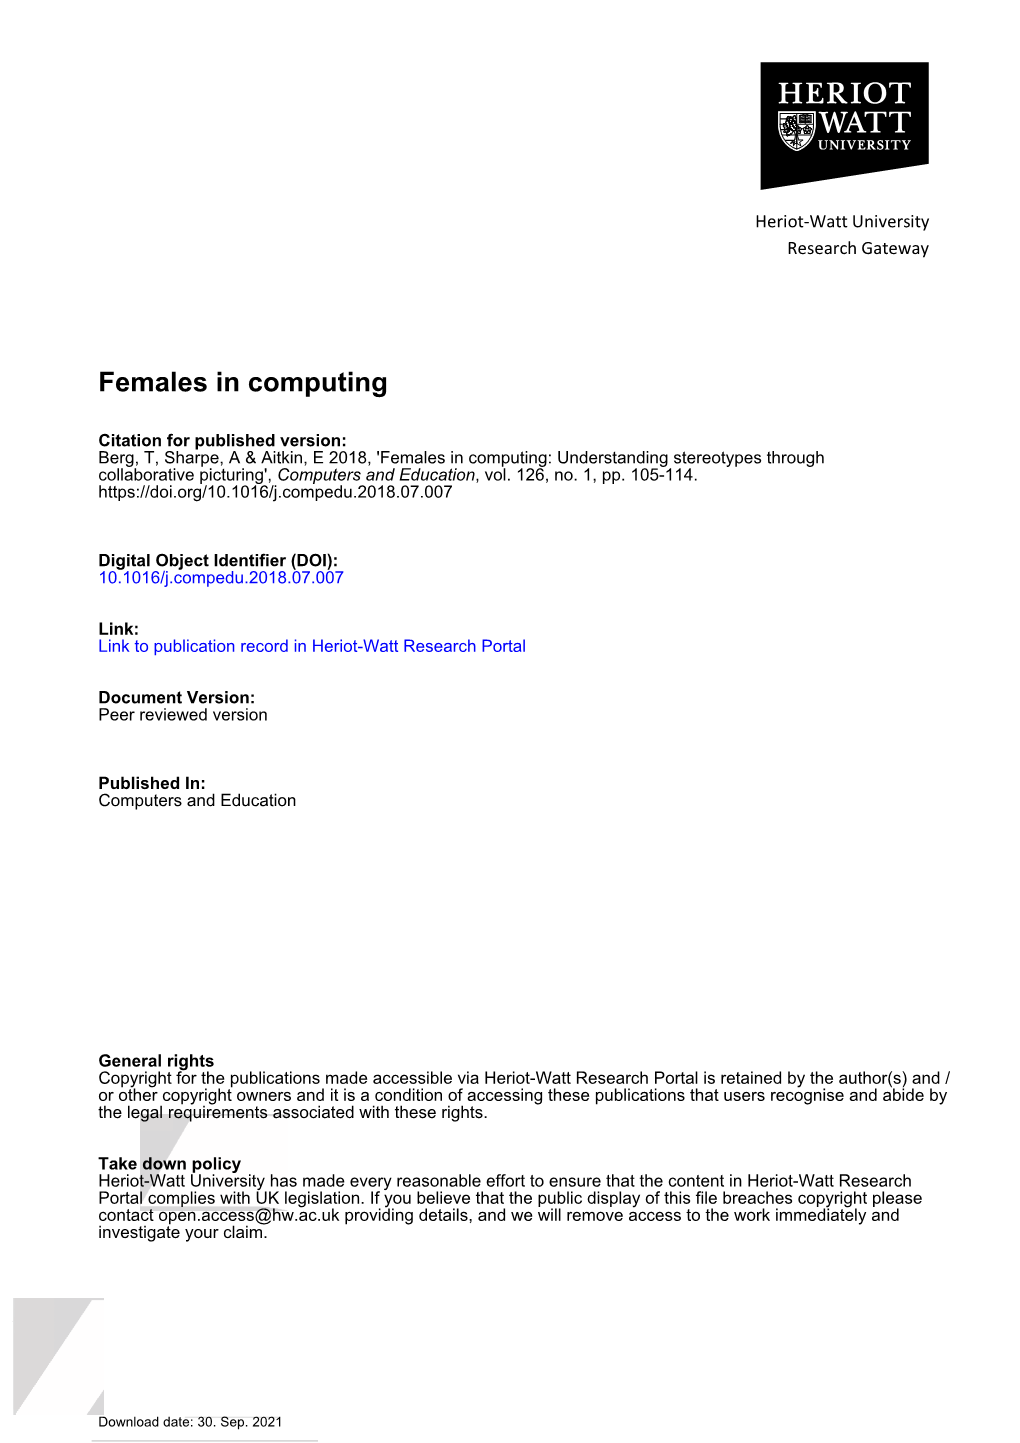 Females in Computing